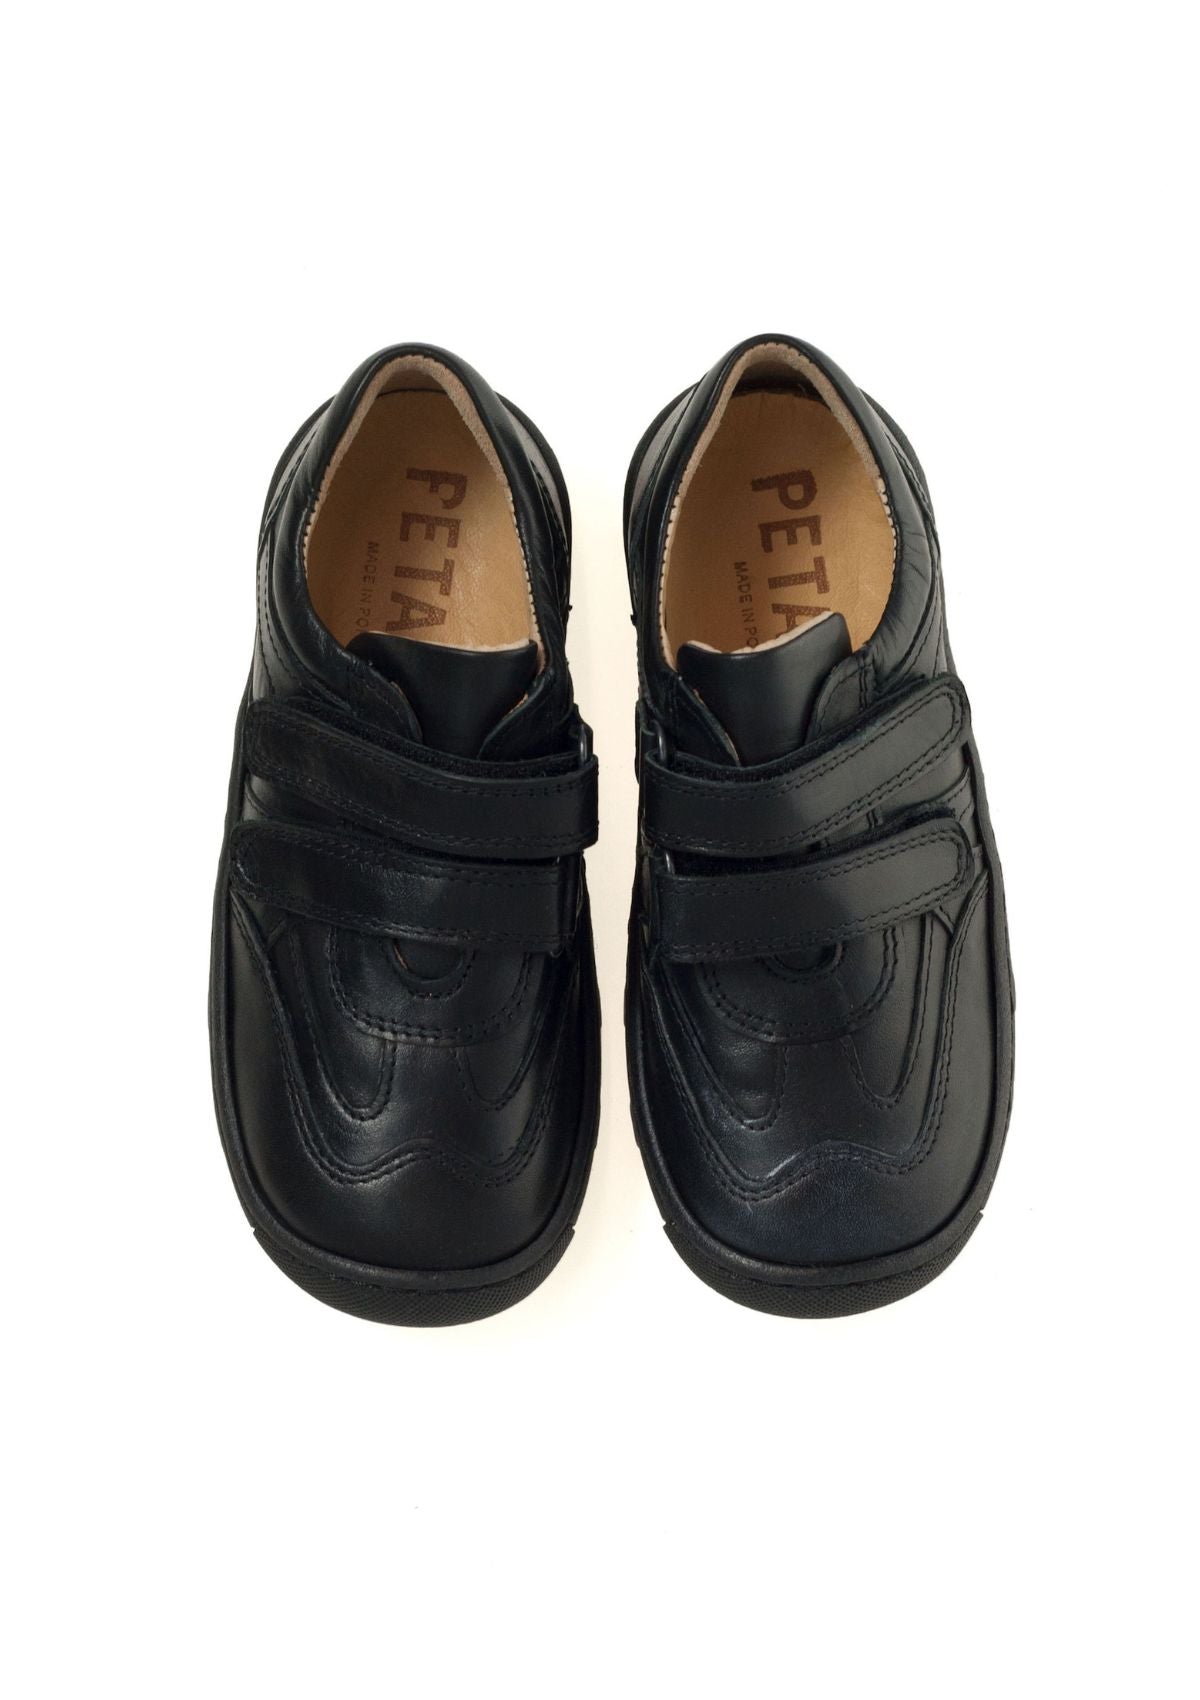 Boys School Shoe-Petasil-Victor (Black Leather)